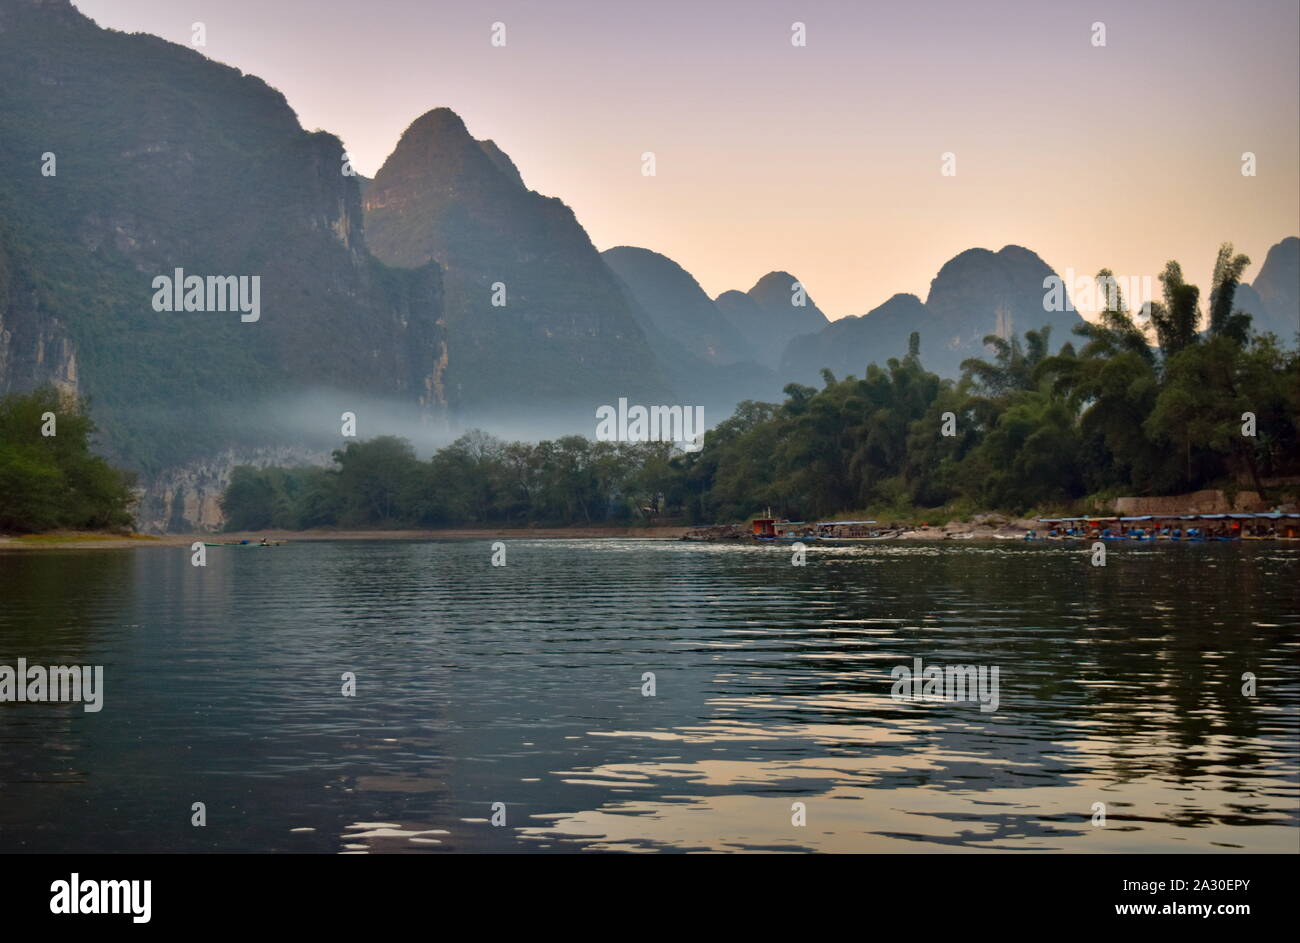 Li river basin and mountains at dusk, Guangxi, China Stock Photo